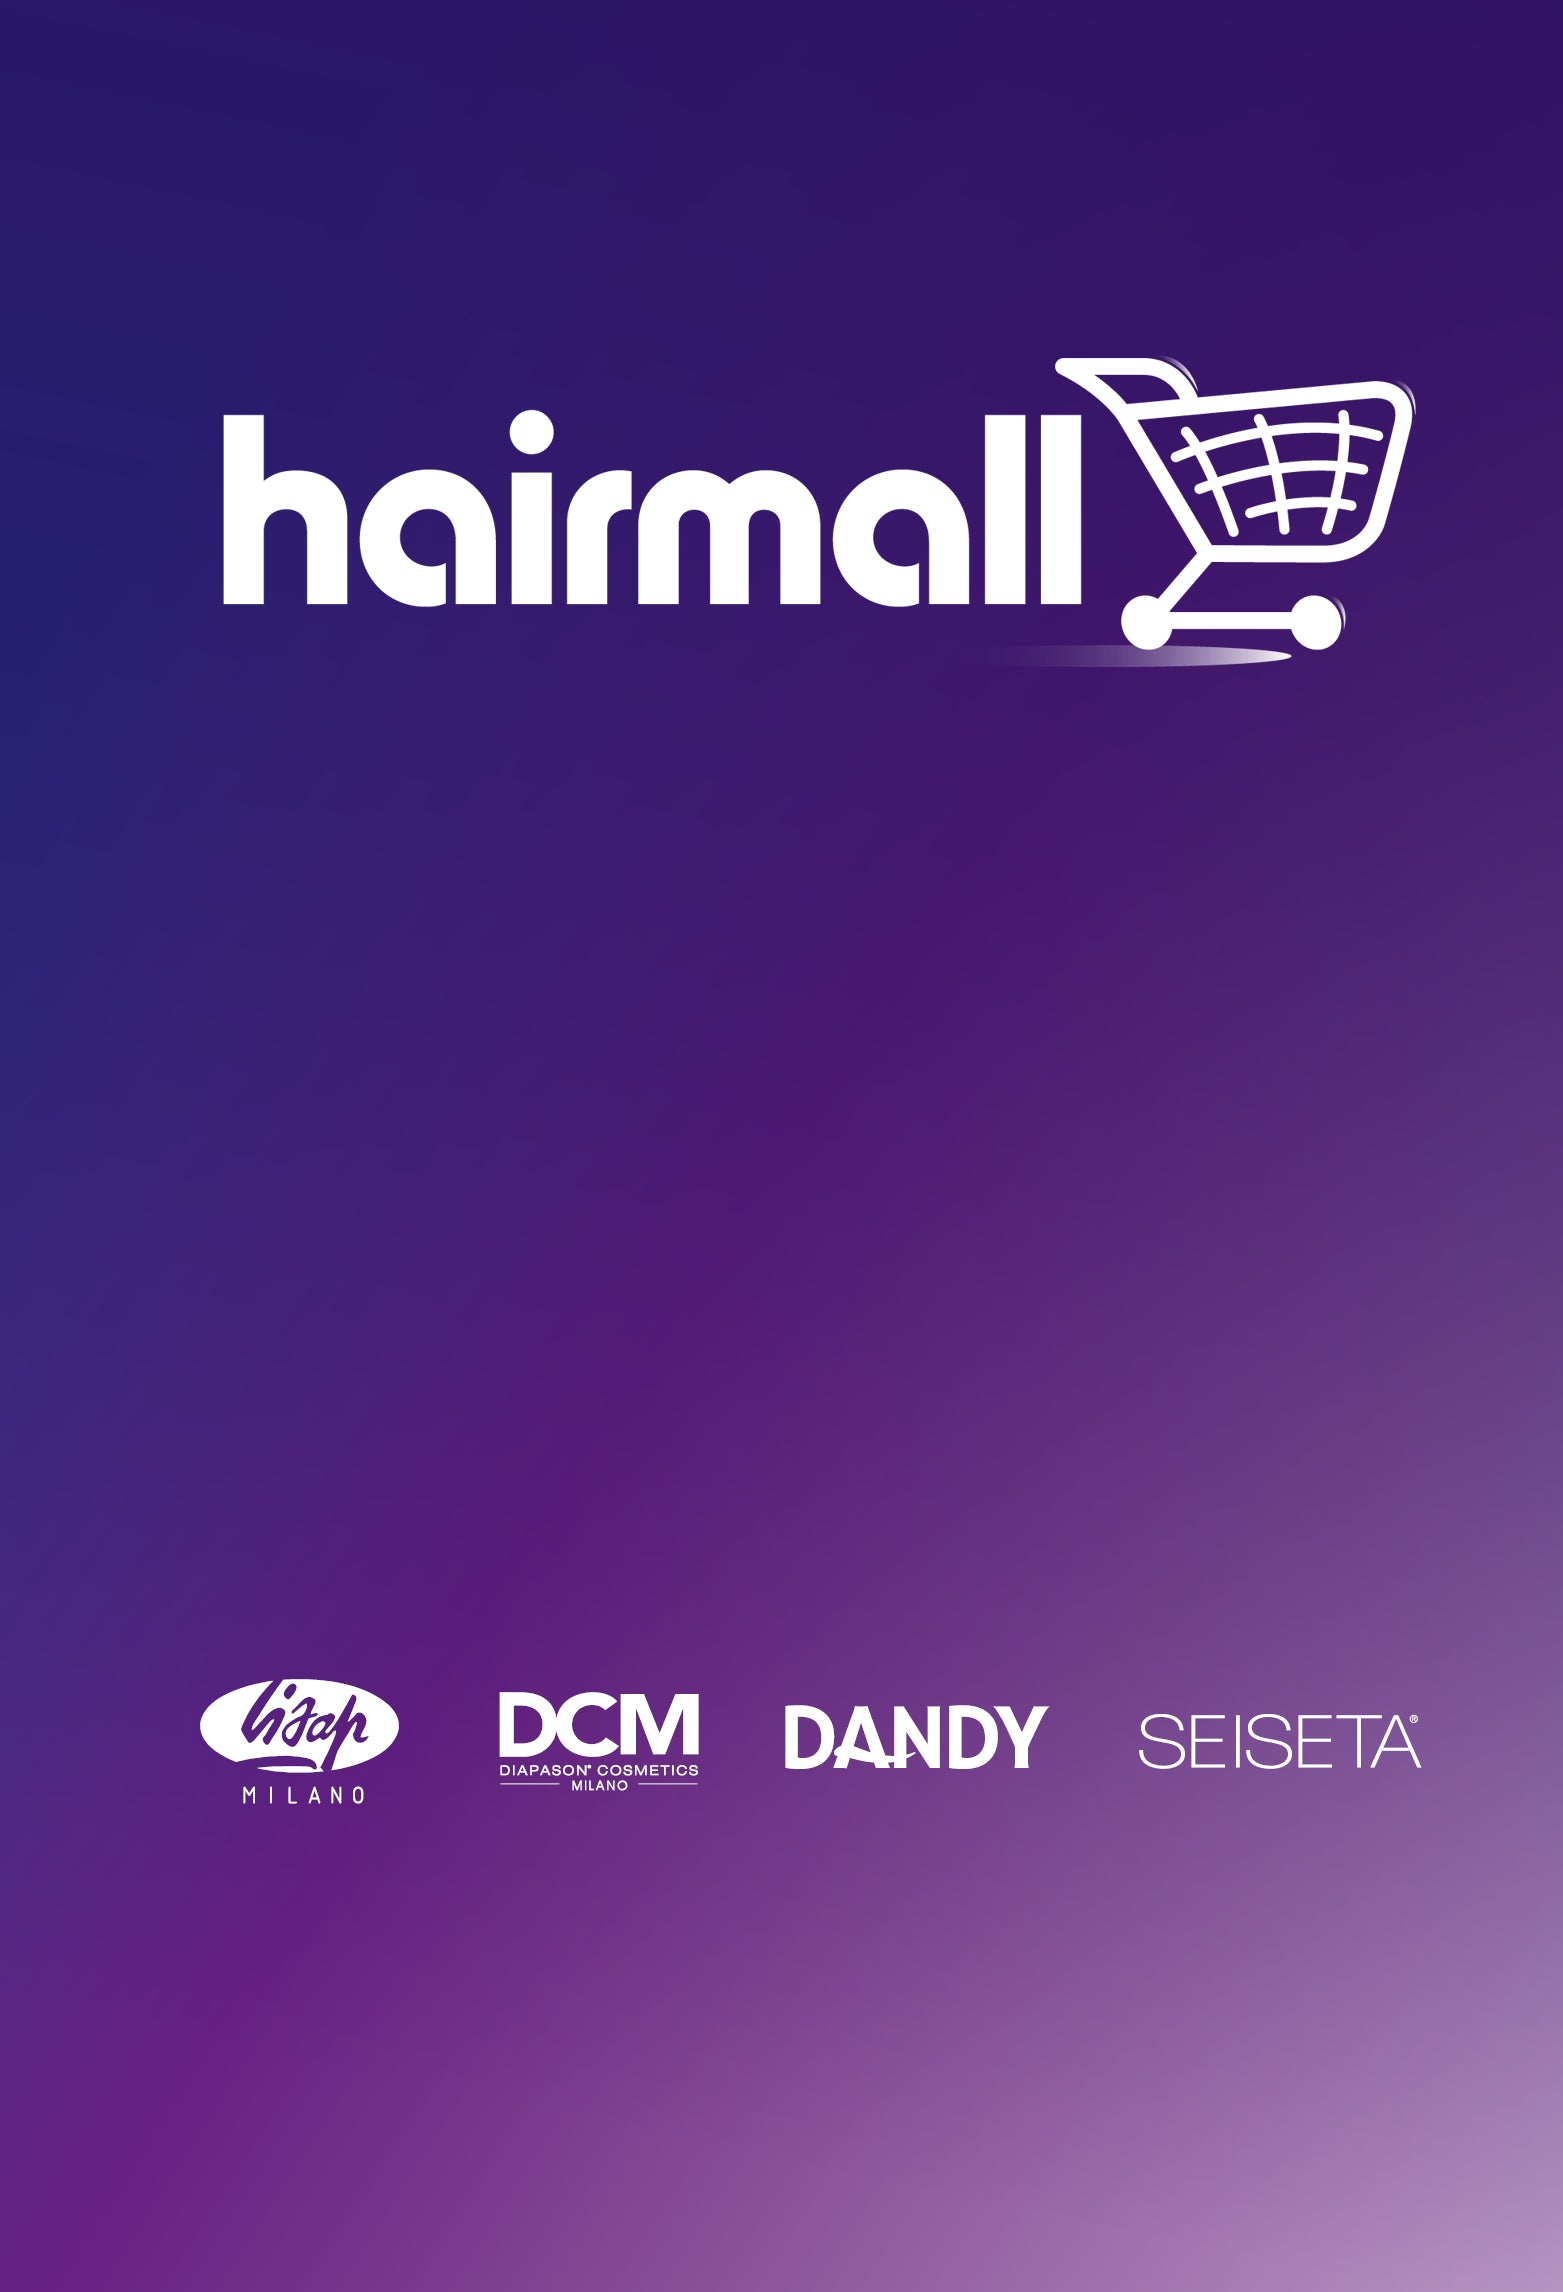 Hairmall Official Shop